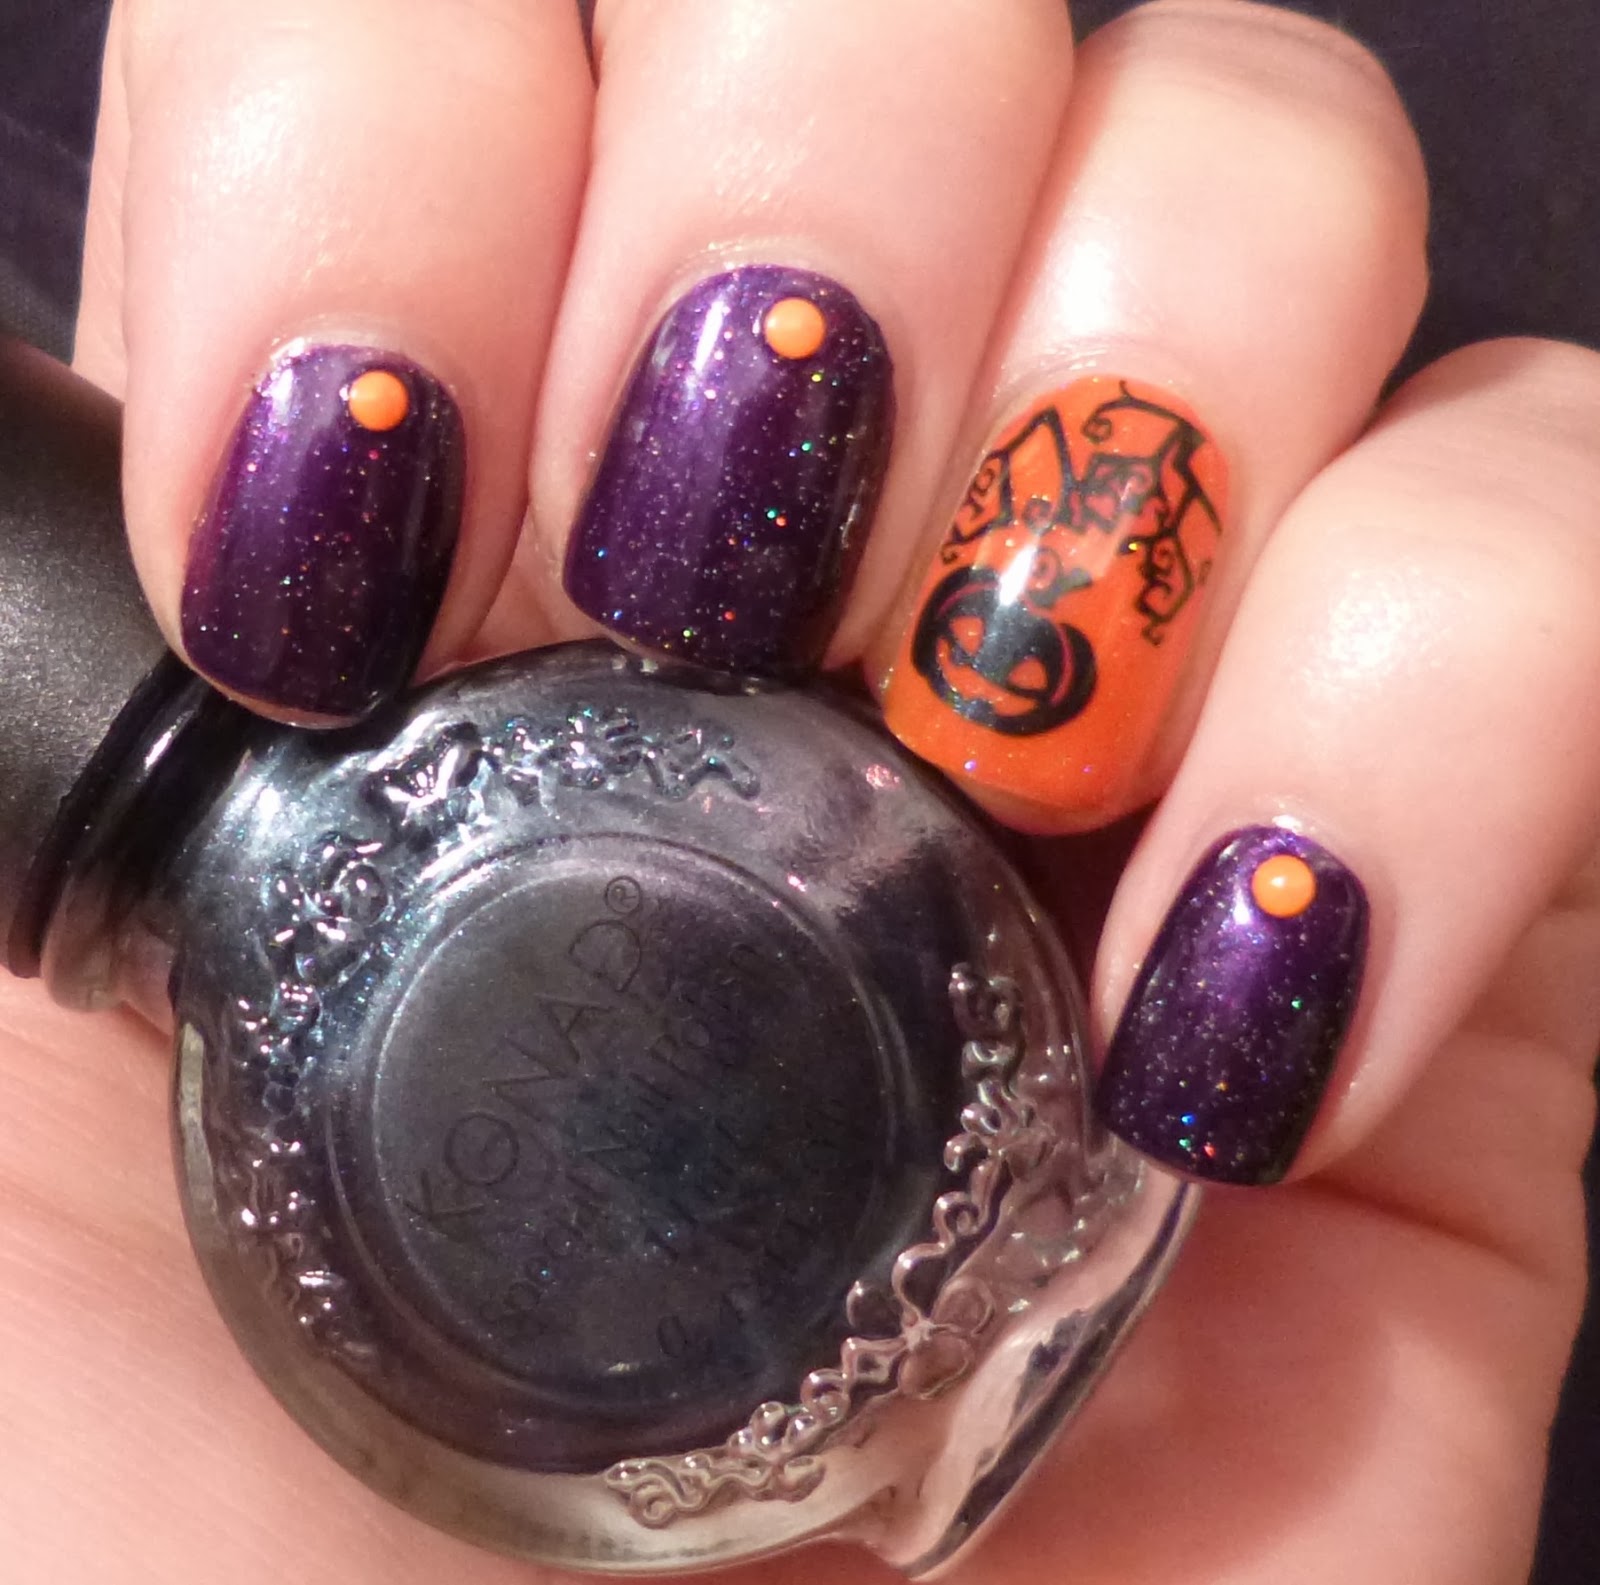 Lou is Perfectly Polished: Halloween Nails: Purple and Pumpkins